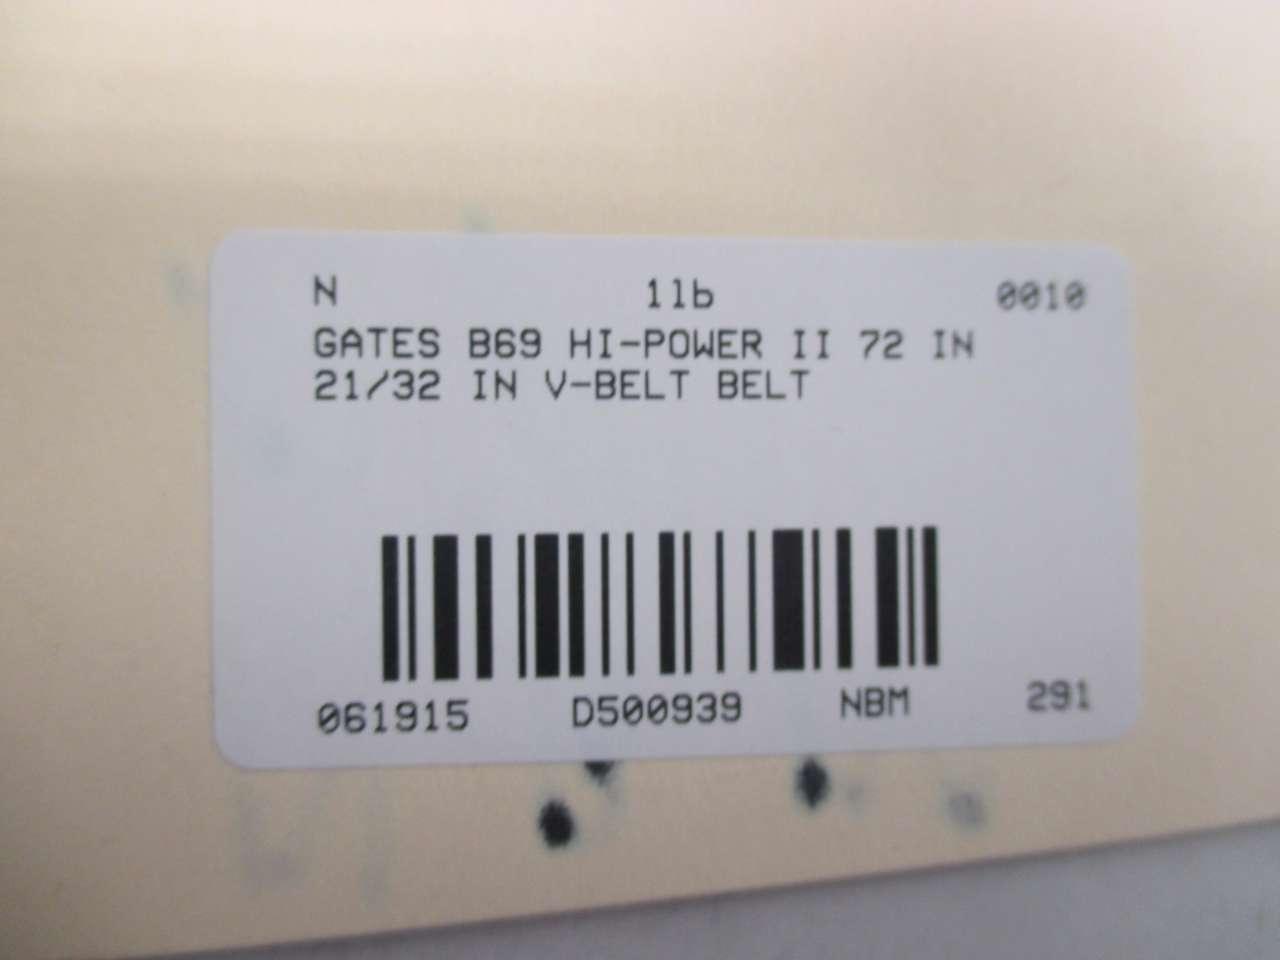 B Section Gates B69 Hi-Power II Belt 13/32 Height B69 Size 21/32 Width 72.0 Belt Outside Circumference